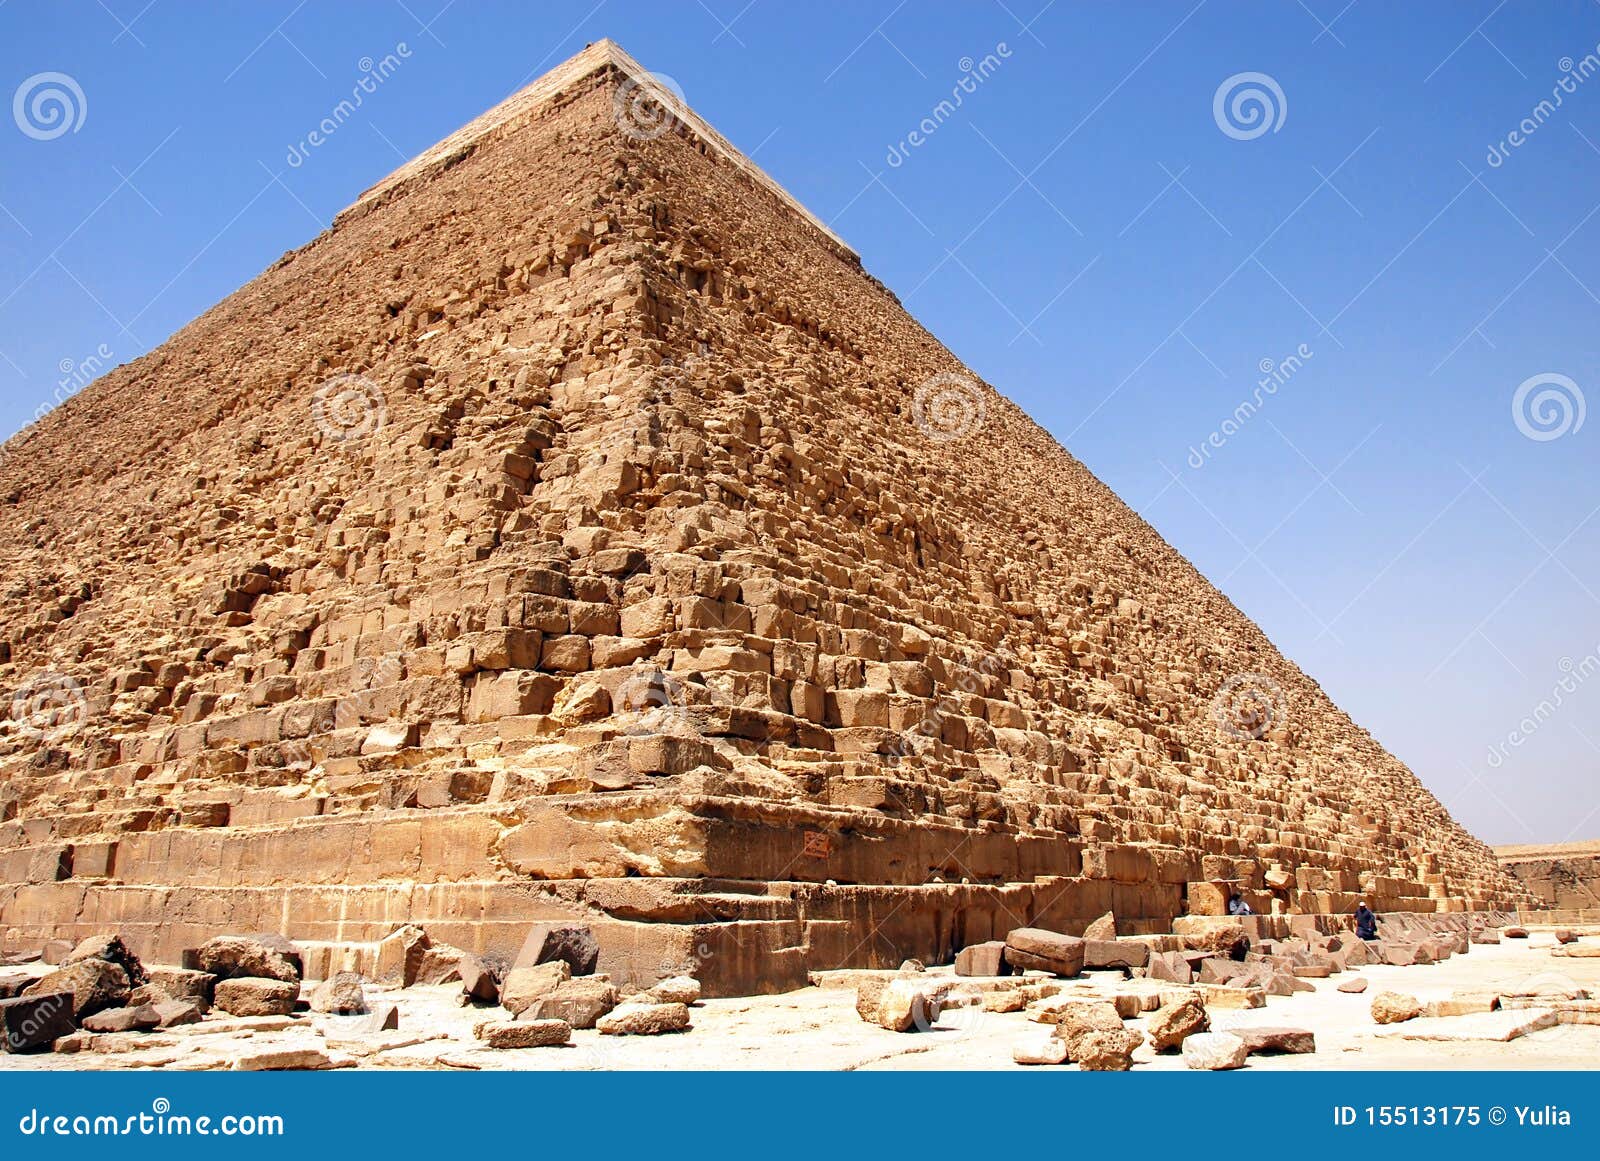 kefren pyramid on giza, cairo